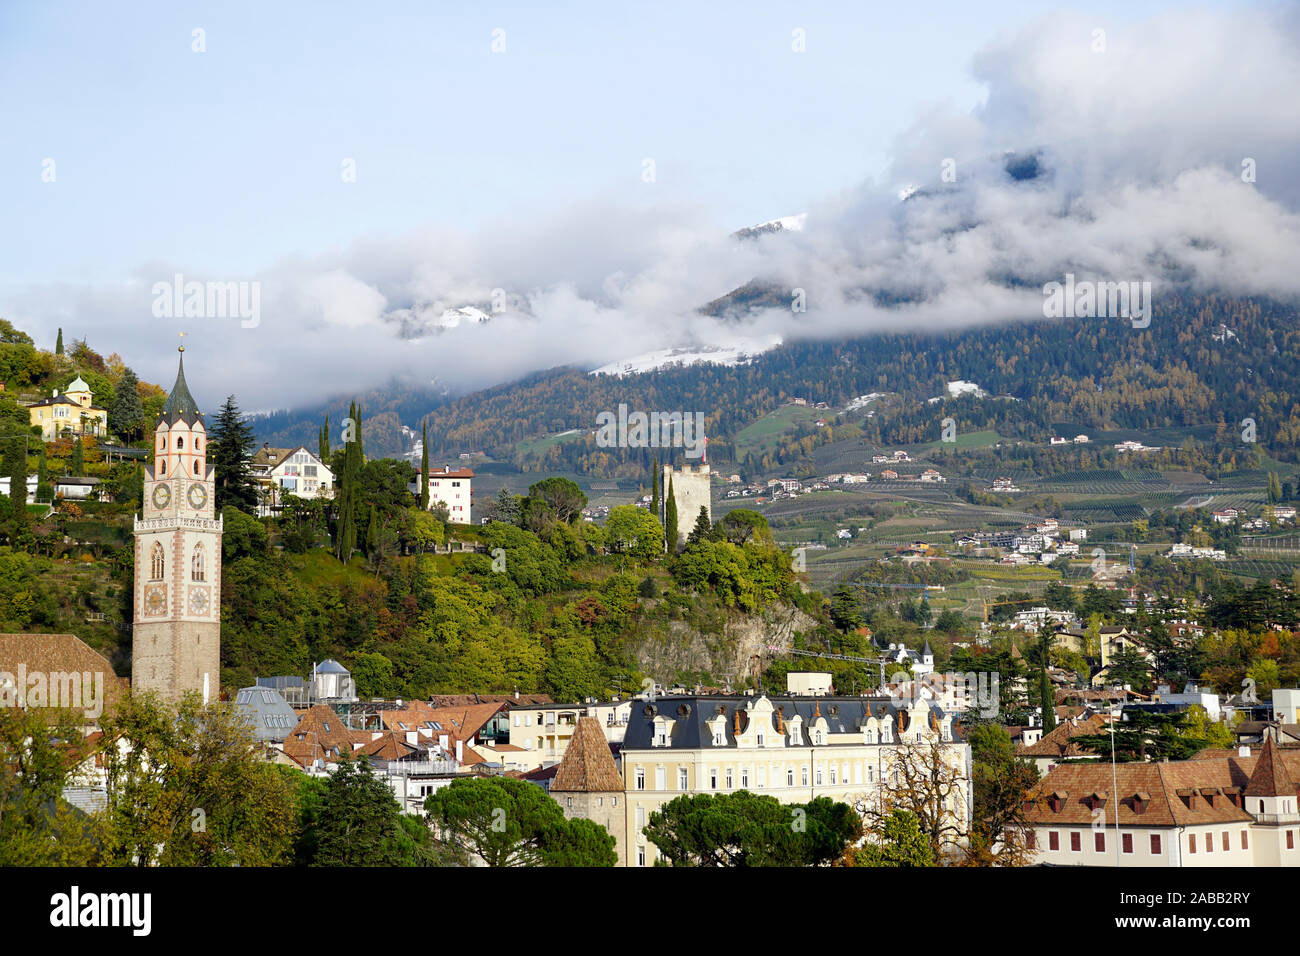 Stadt Meran und St. Nikolaus Kirche in Meran in Südtirol, Italien. Bewölkt Herbst Tag. Stockfoto